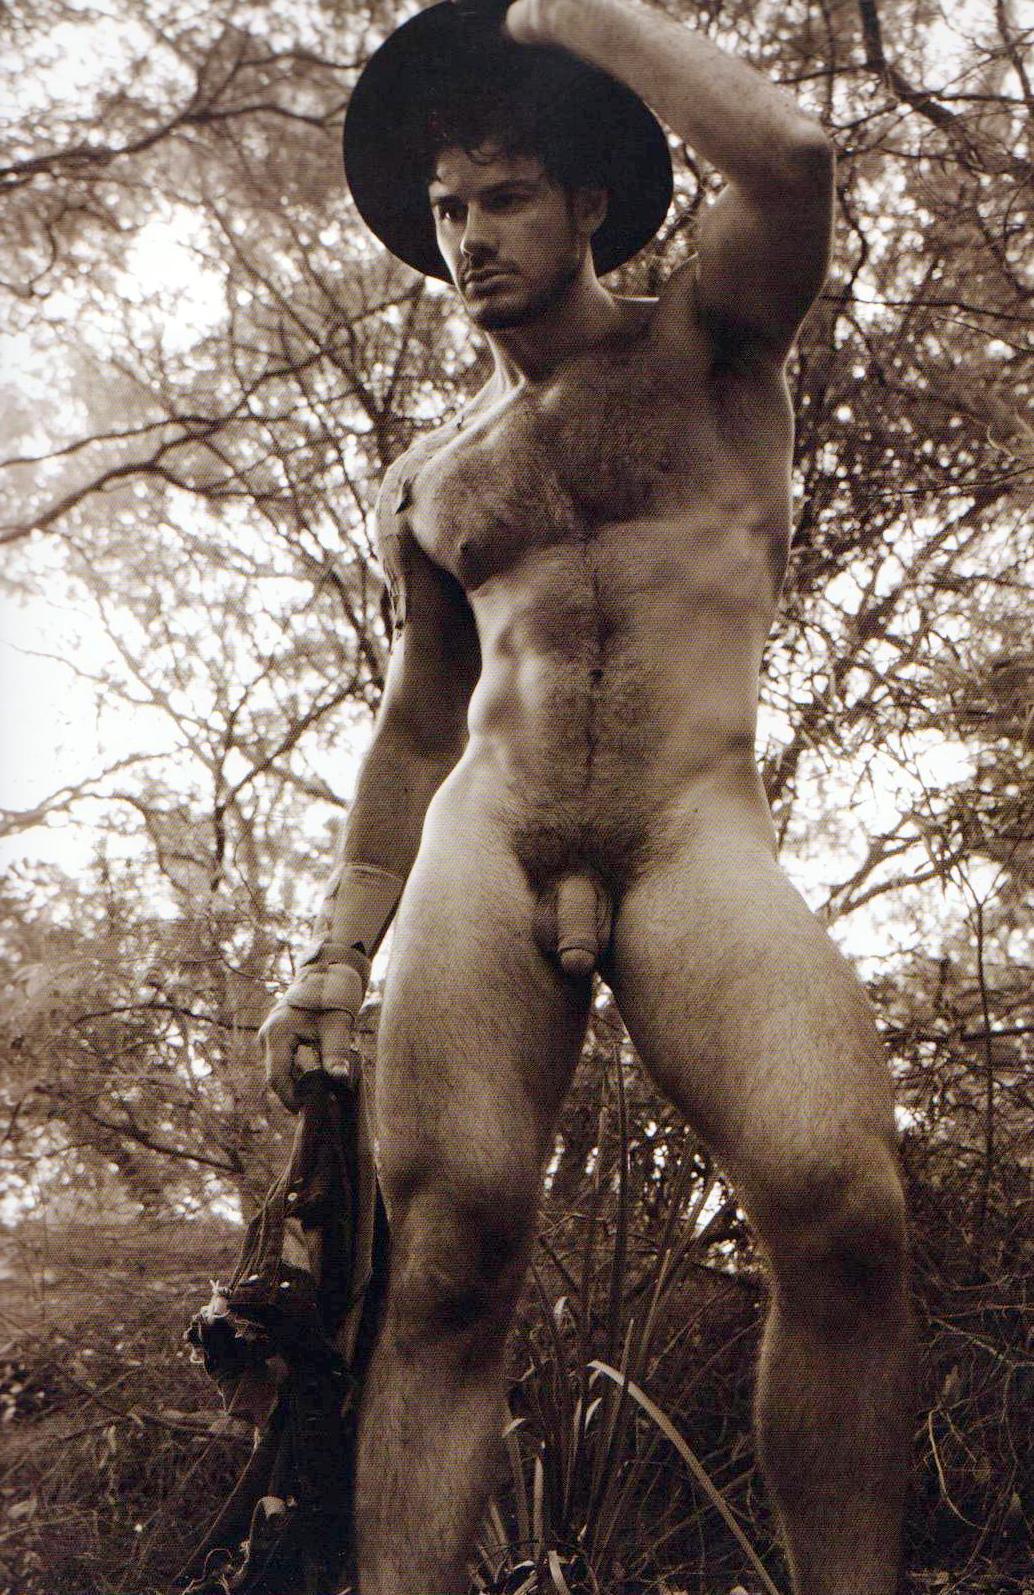 australian cowboys naked - www.editions-mem.com.